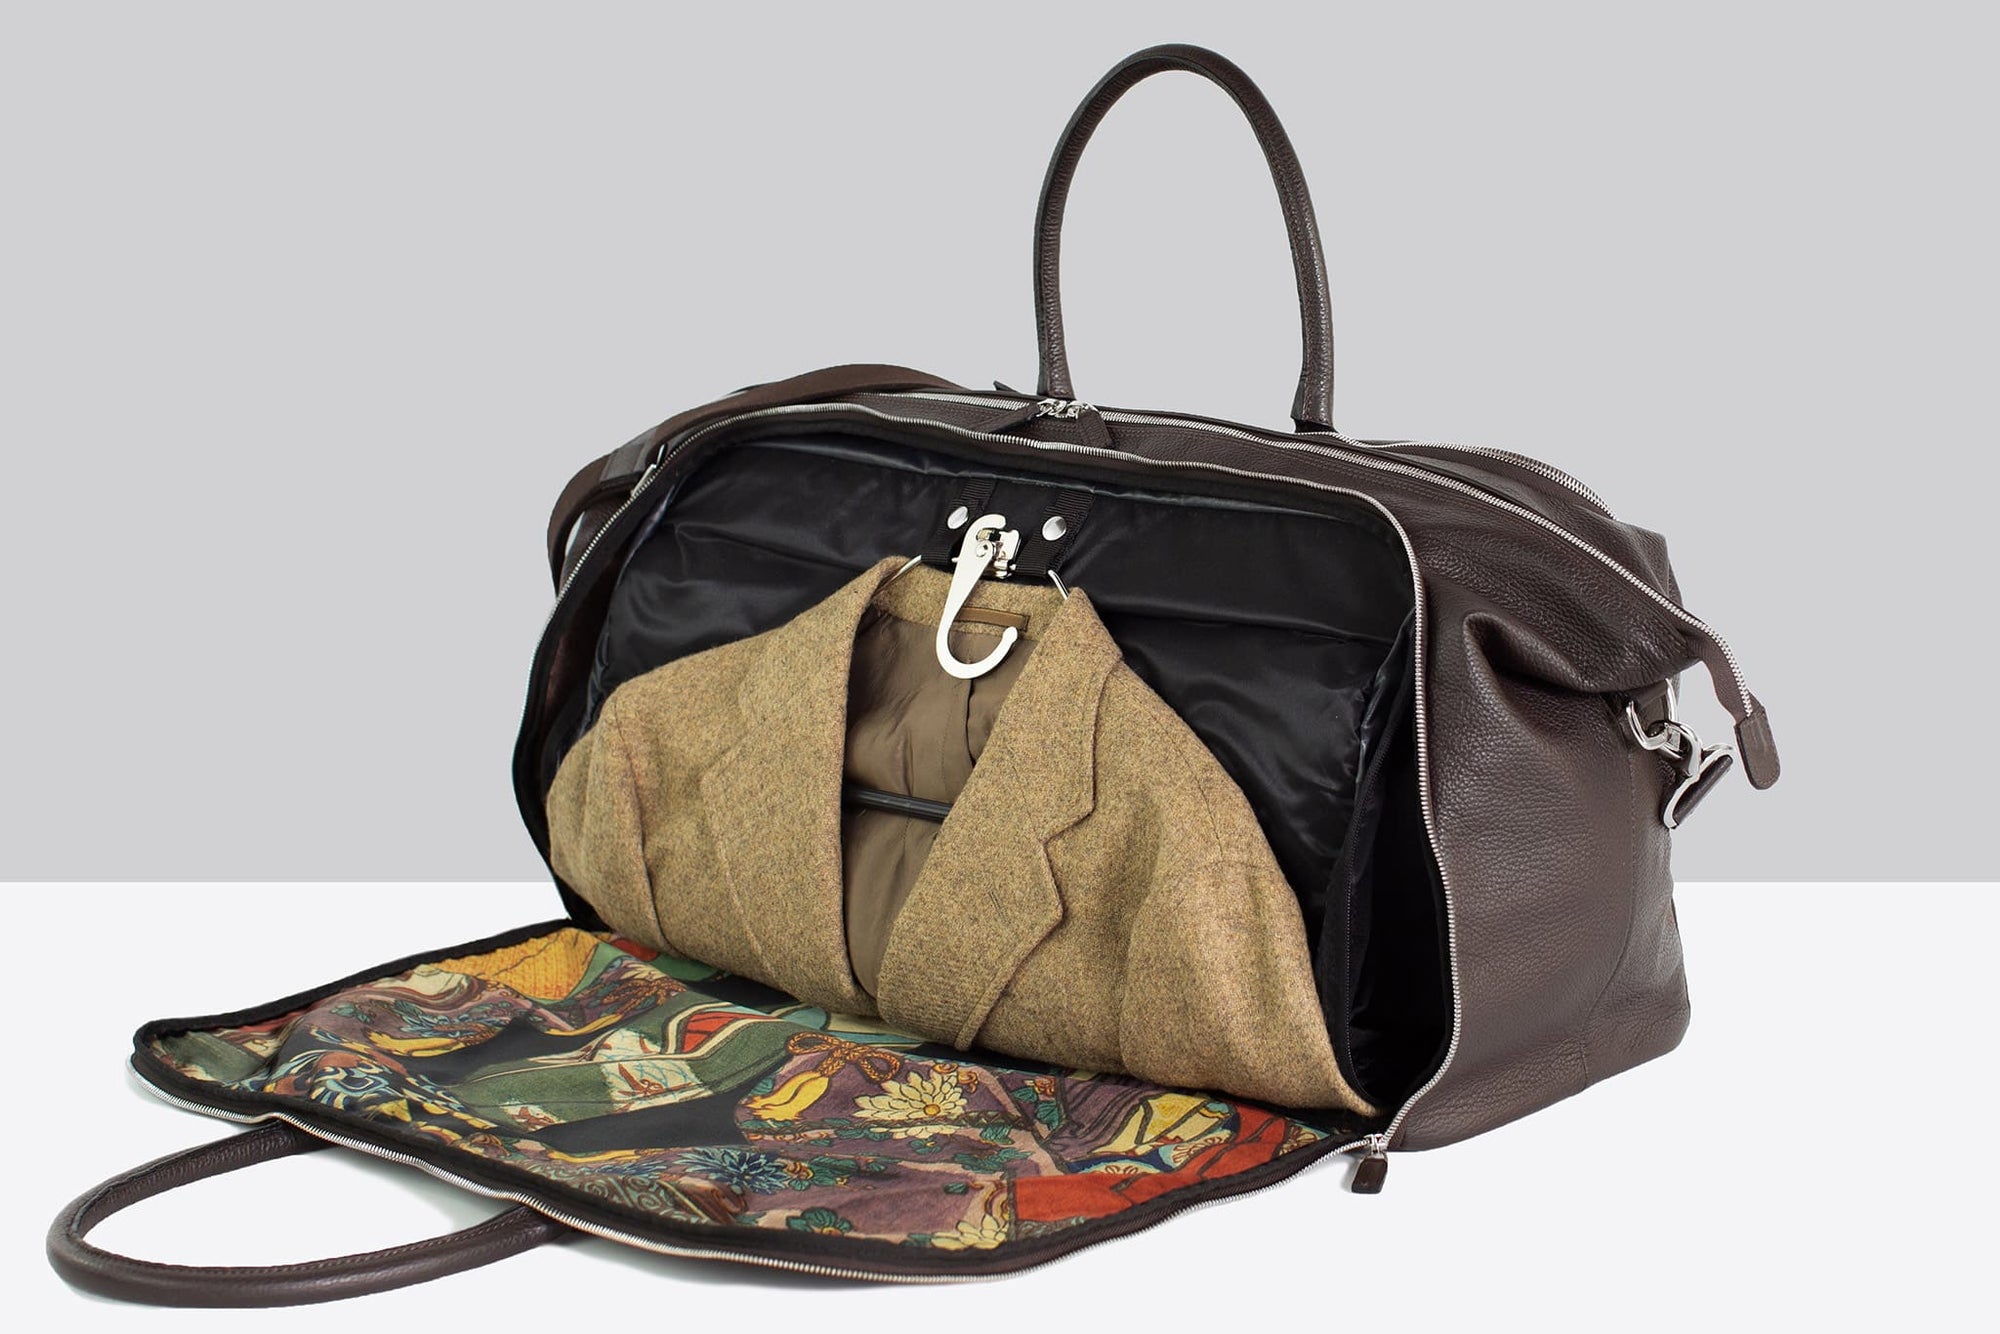 Patented Garment bag luggage  LUDOVICO MARABOTTO - Ludovico Marabotto